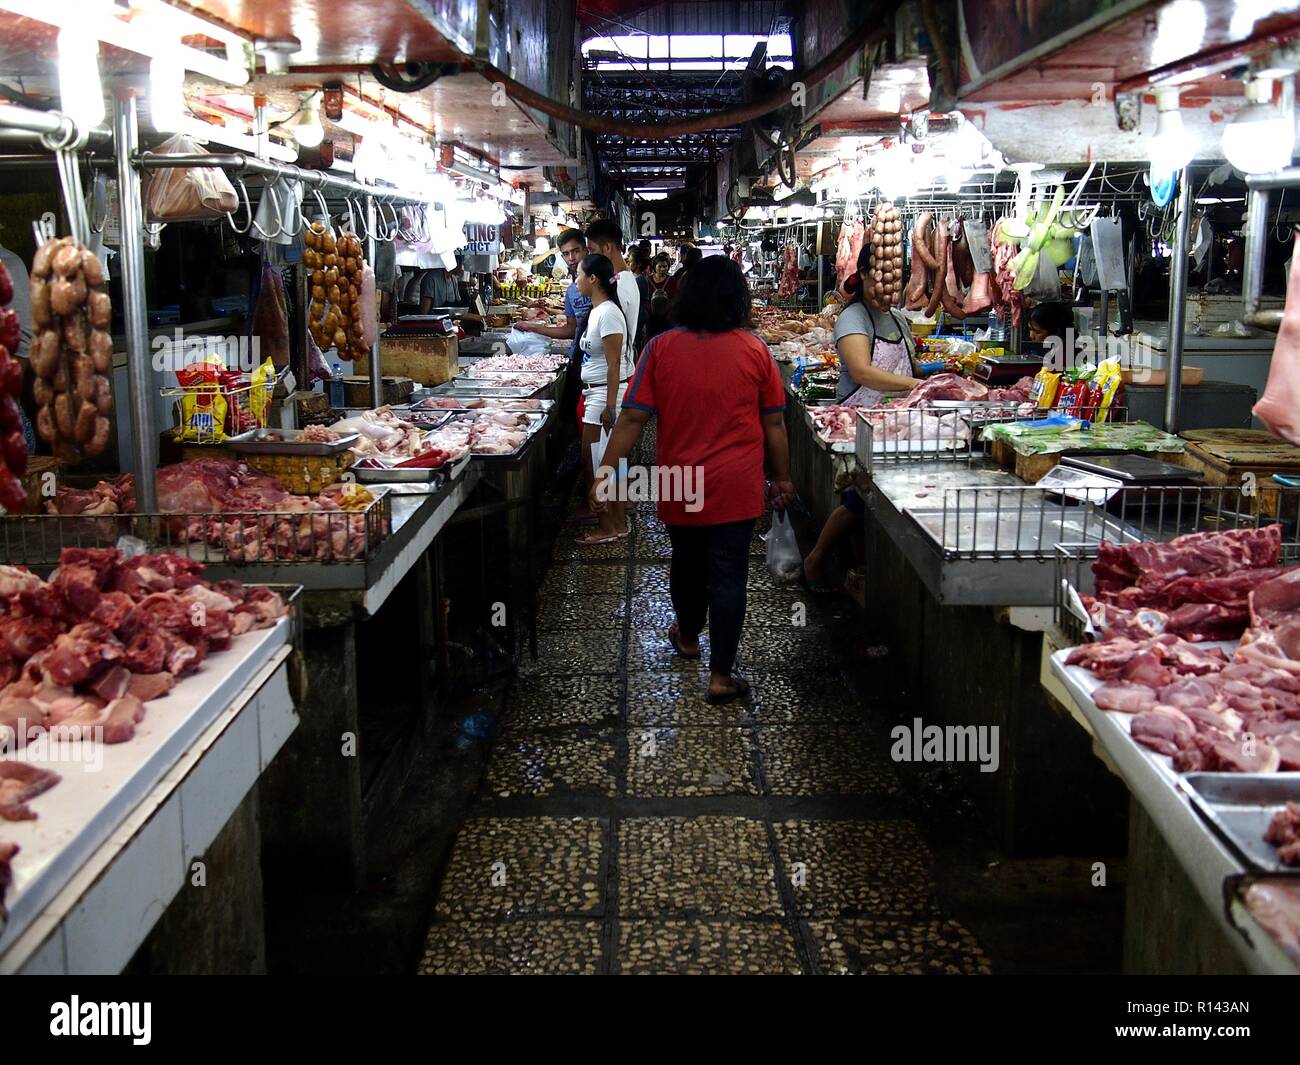 BINANGONAN, RIZAL, PHILIPPINES - NOVEMBER 8, 2018: Rows of fresh meat and fish vendor stalls at a public market. Stock Photo